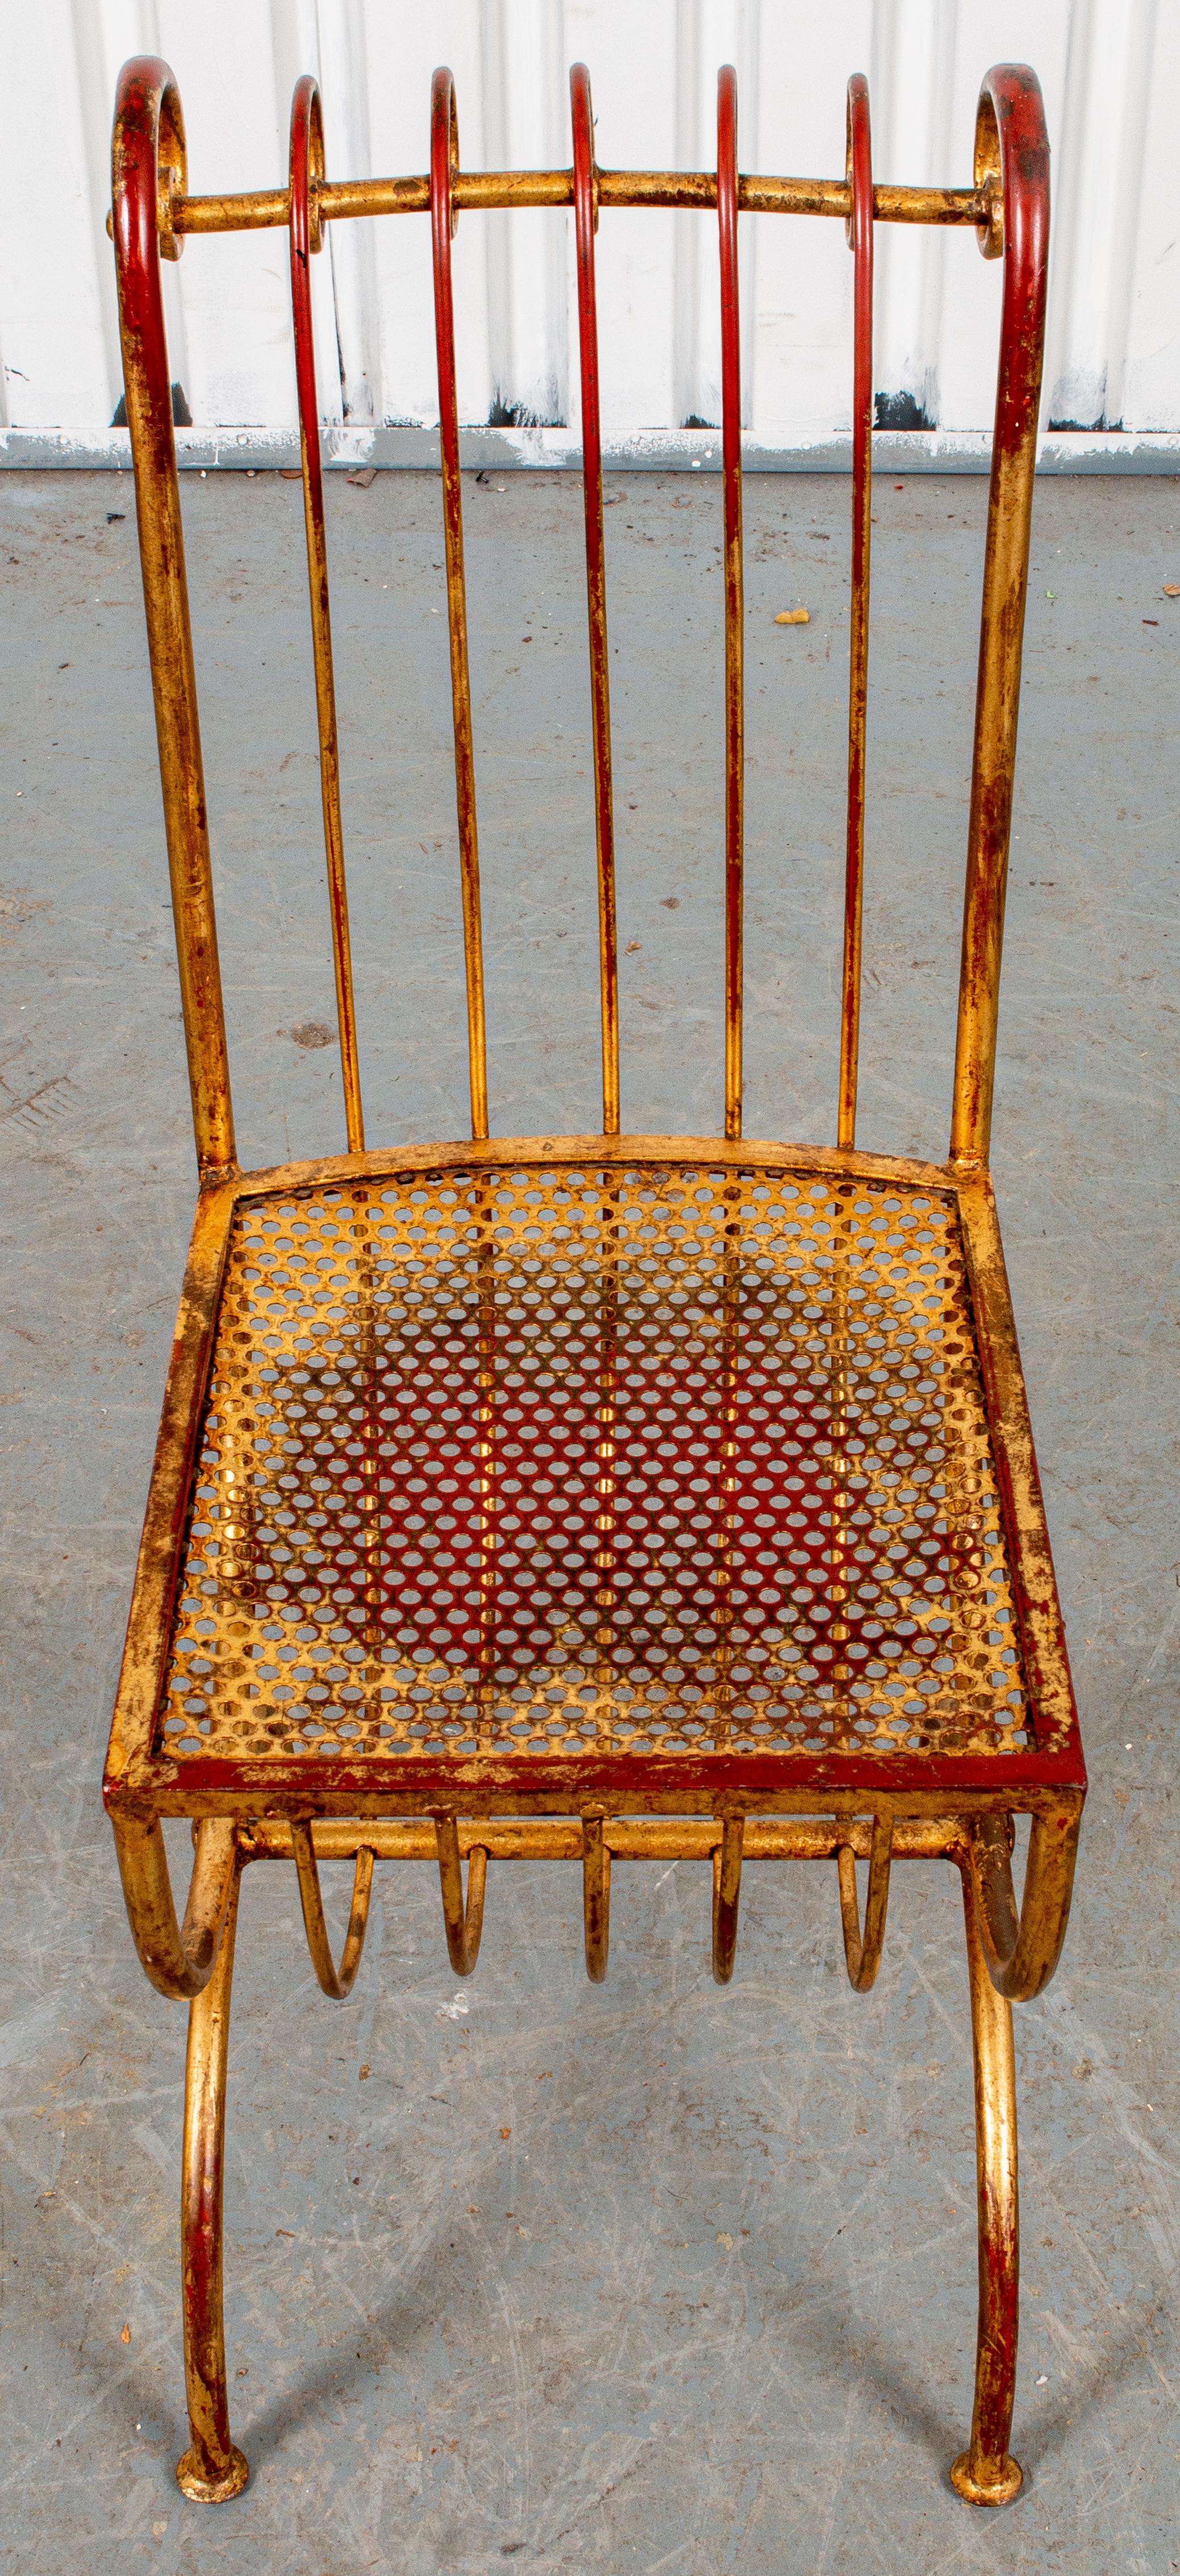 20th Century Hollywood Regency Gilt Metal Garden Chair